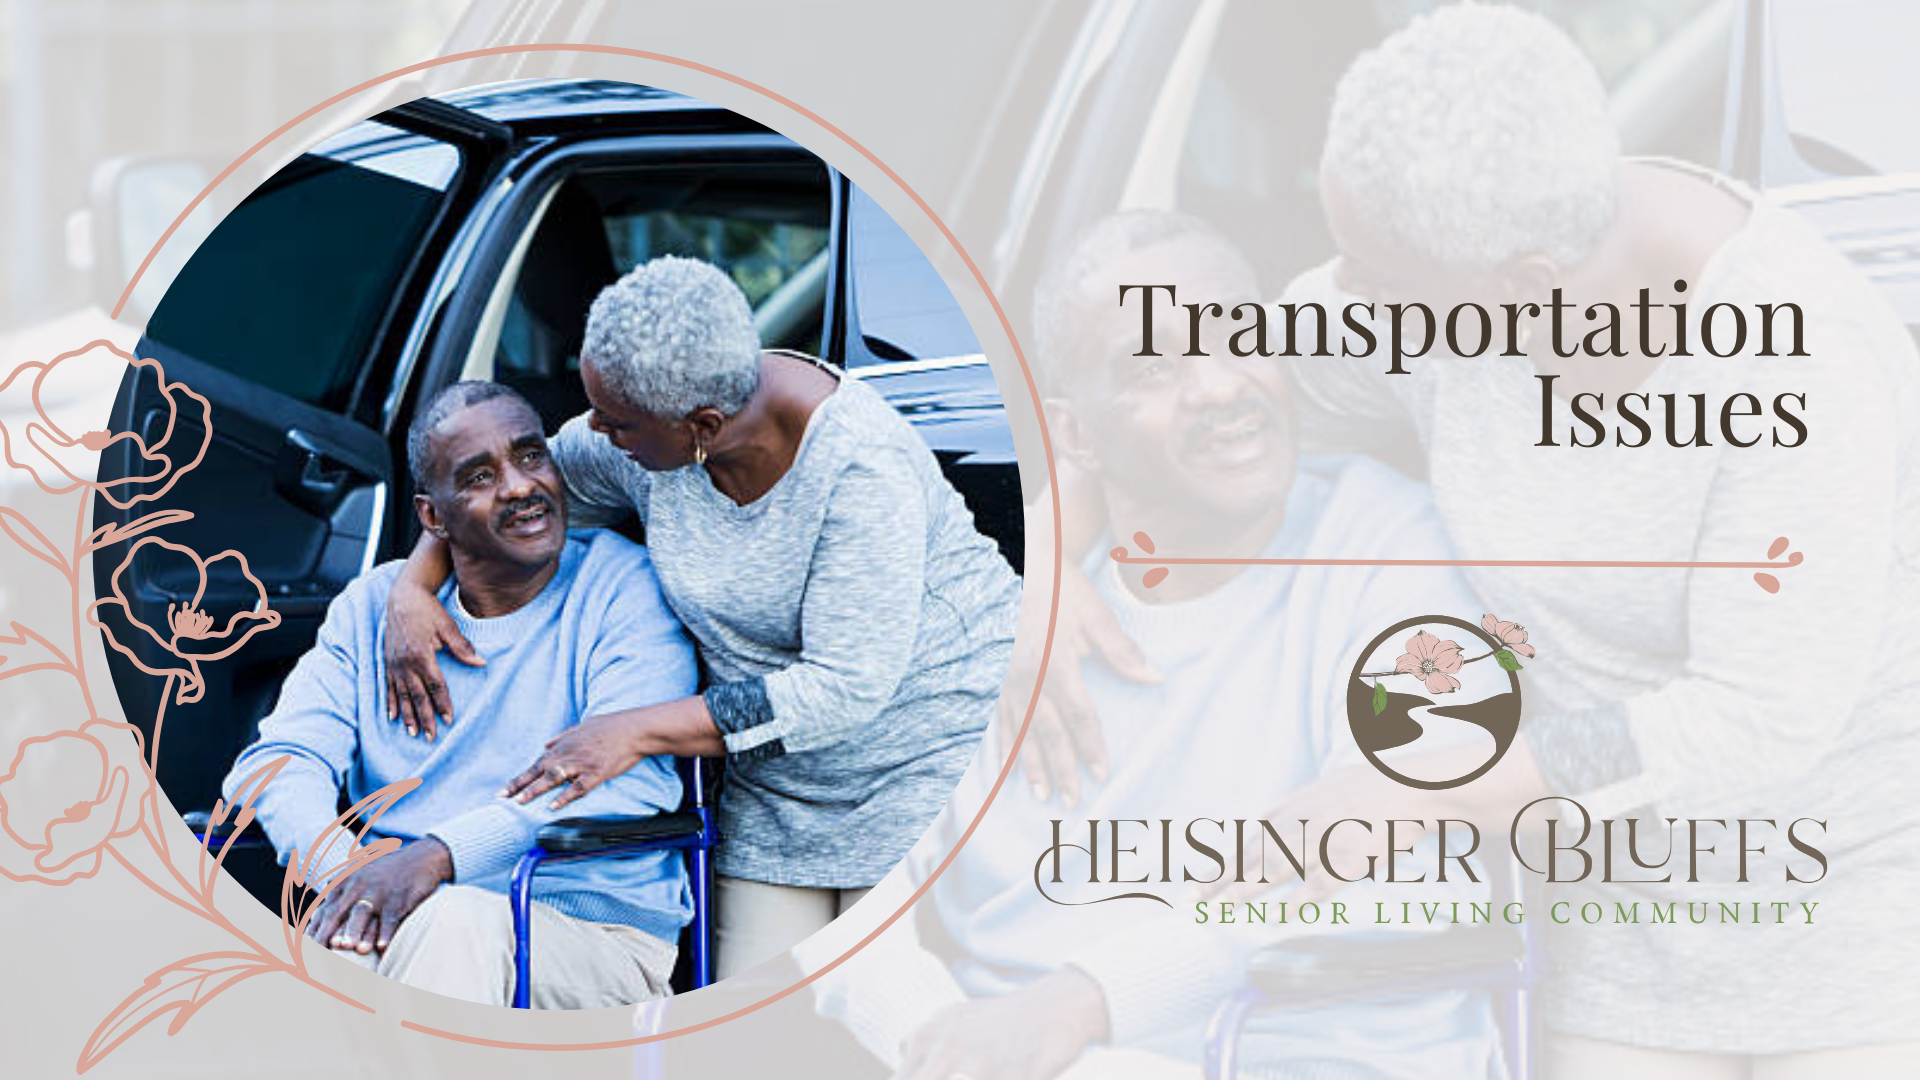 Independent Living communities like Heisinger Bluffs offer transportation services